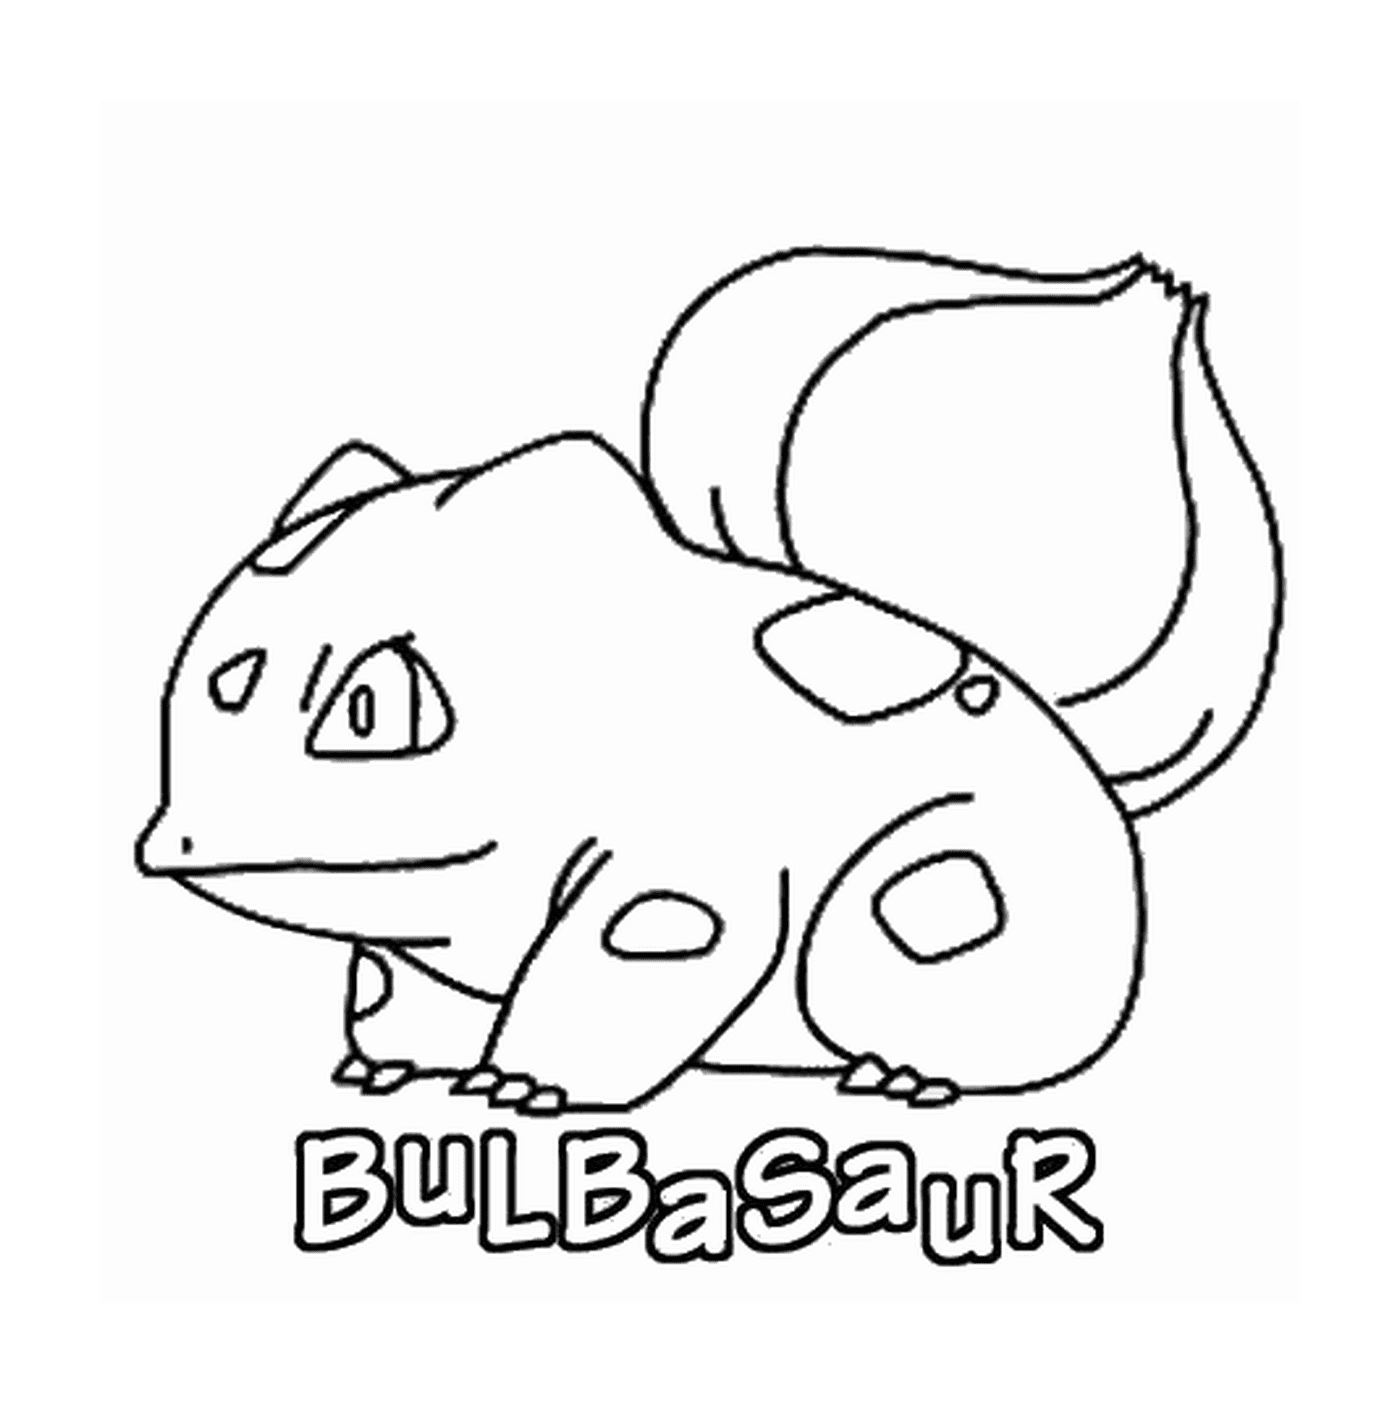 coloriage pokemon 001 bulbasaur